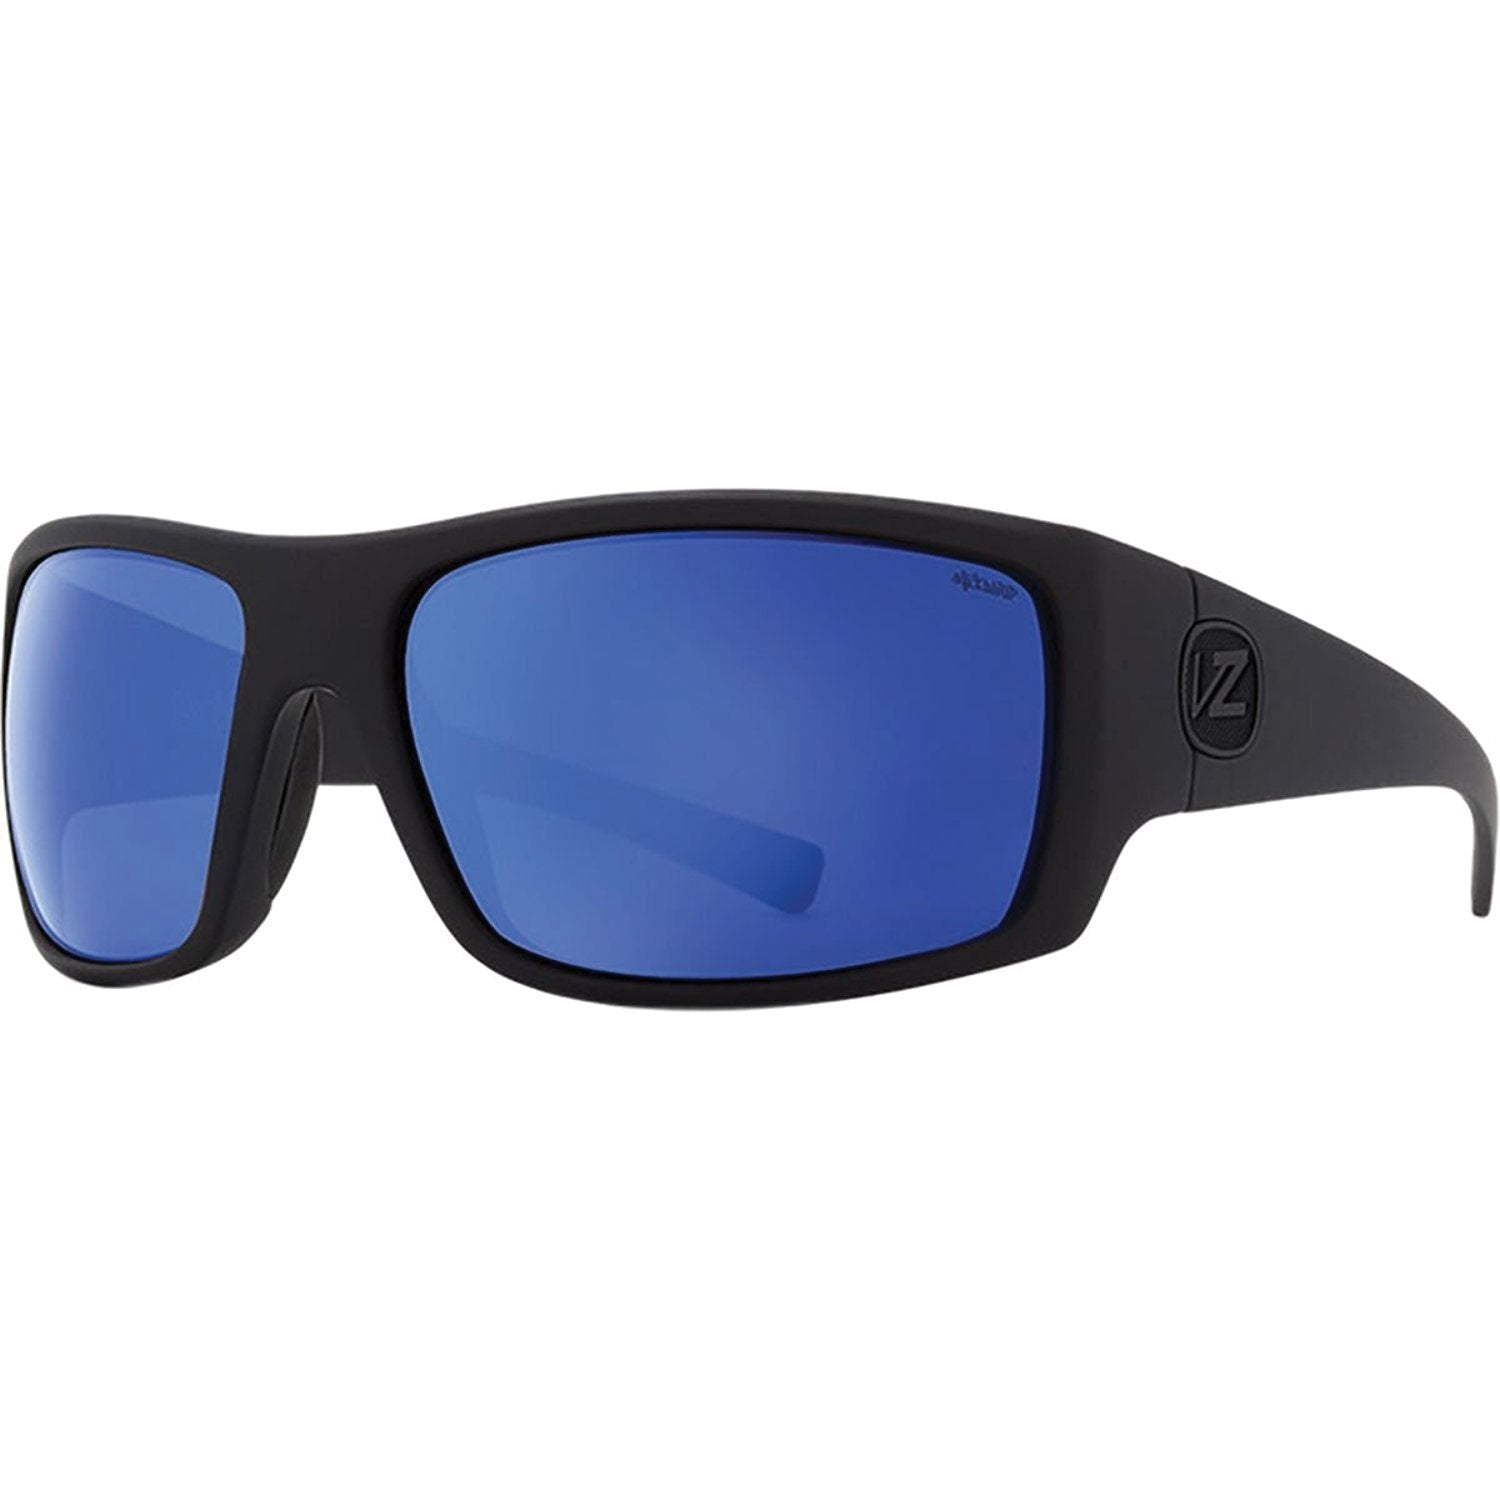 Von Zipper Suplex Polarized Sunglasses